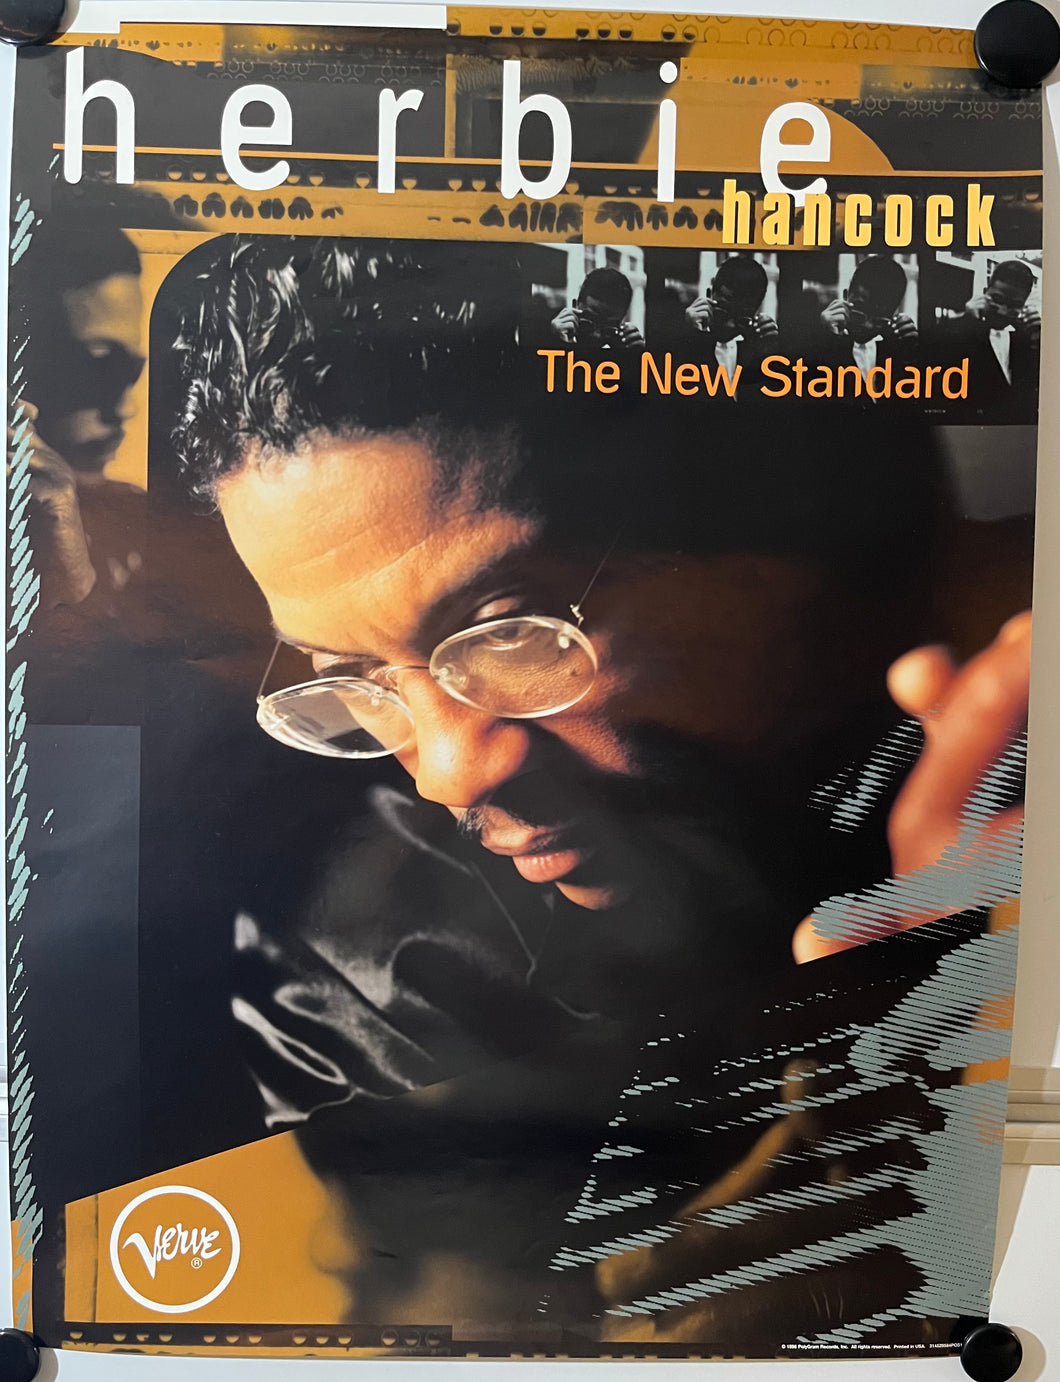 Herbie Hancock - 20” x 30” Promotional Poster